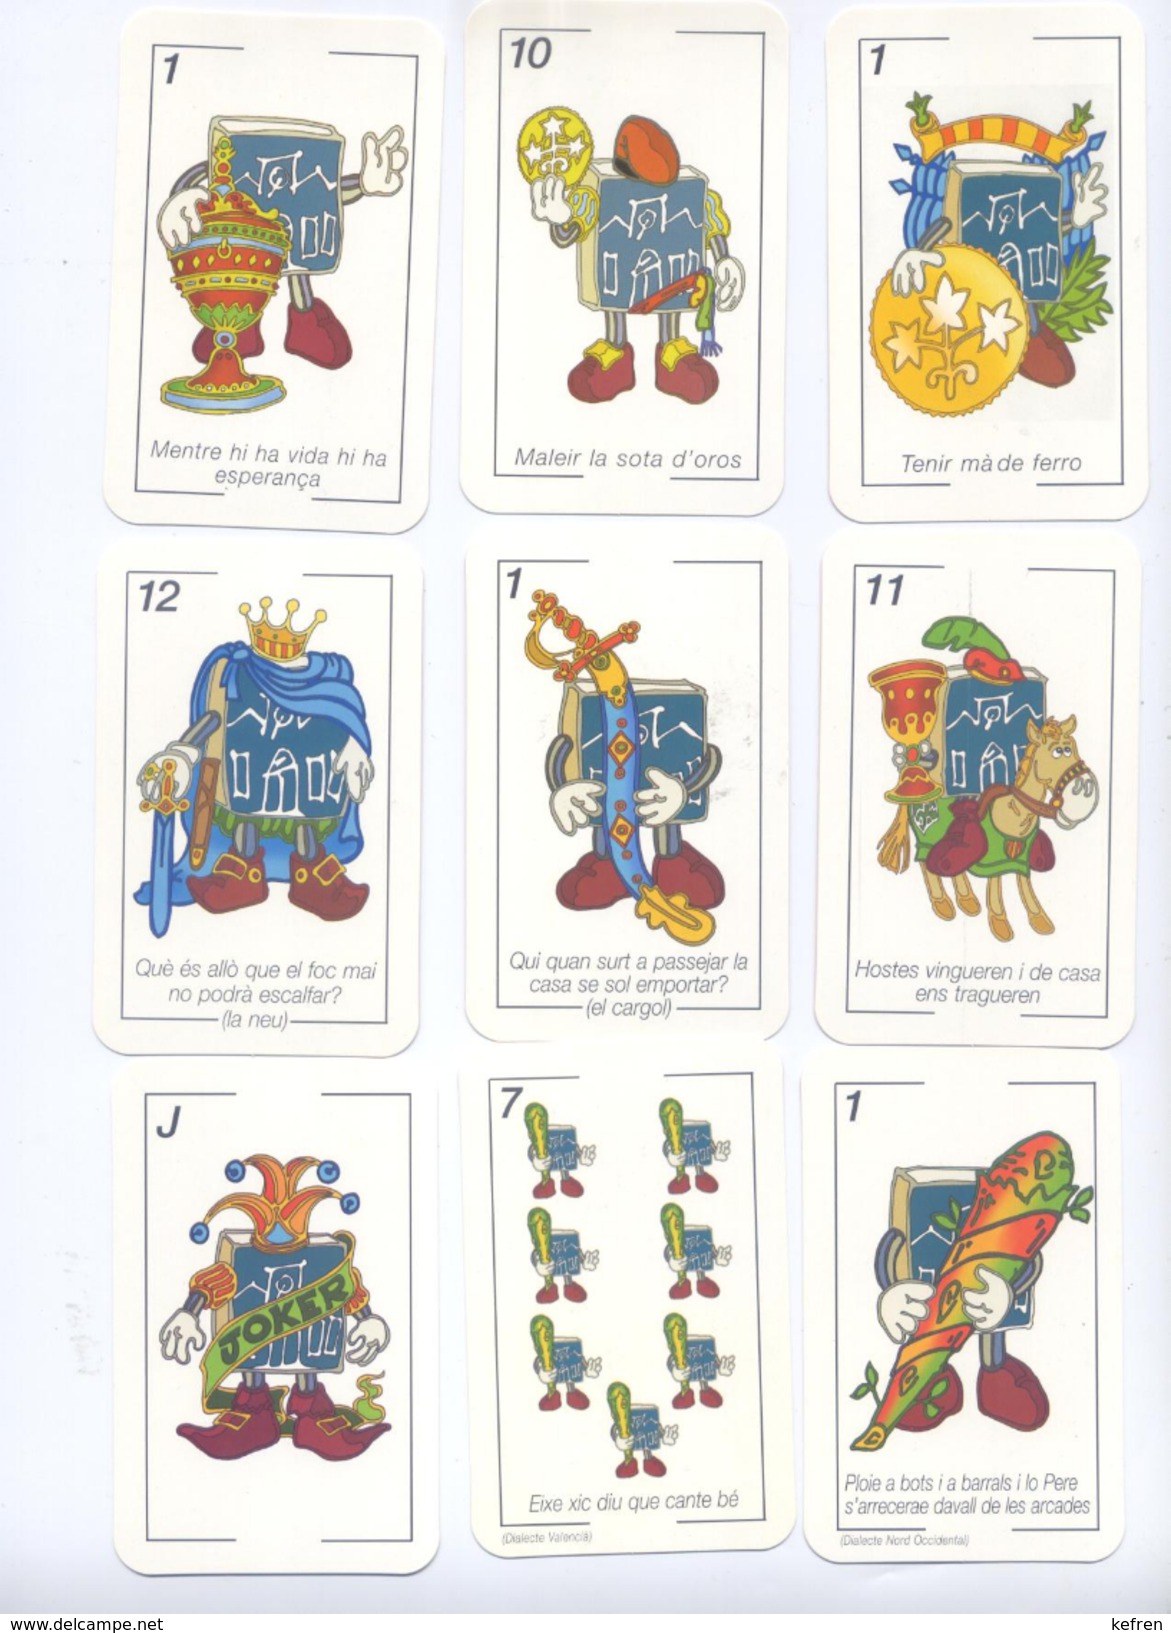 Playing Cards (classic) - BARAJA ESPAÑOLA, PLAYING CARDS DECK, DE WENCESLAO  GUARRO DEL AÑO 1895